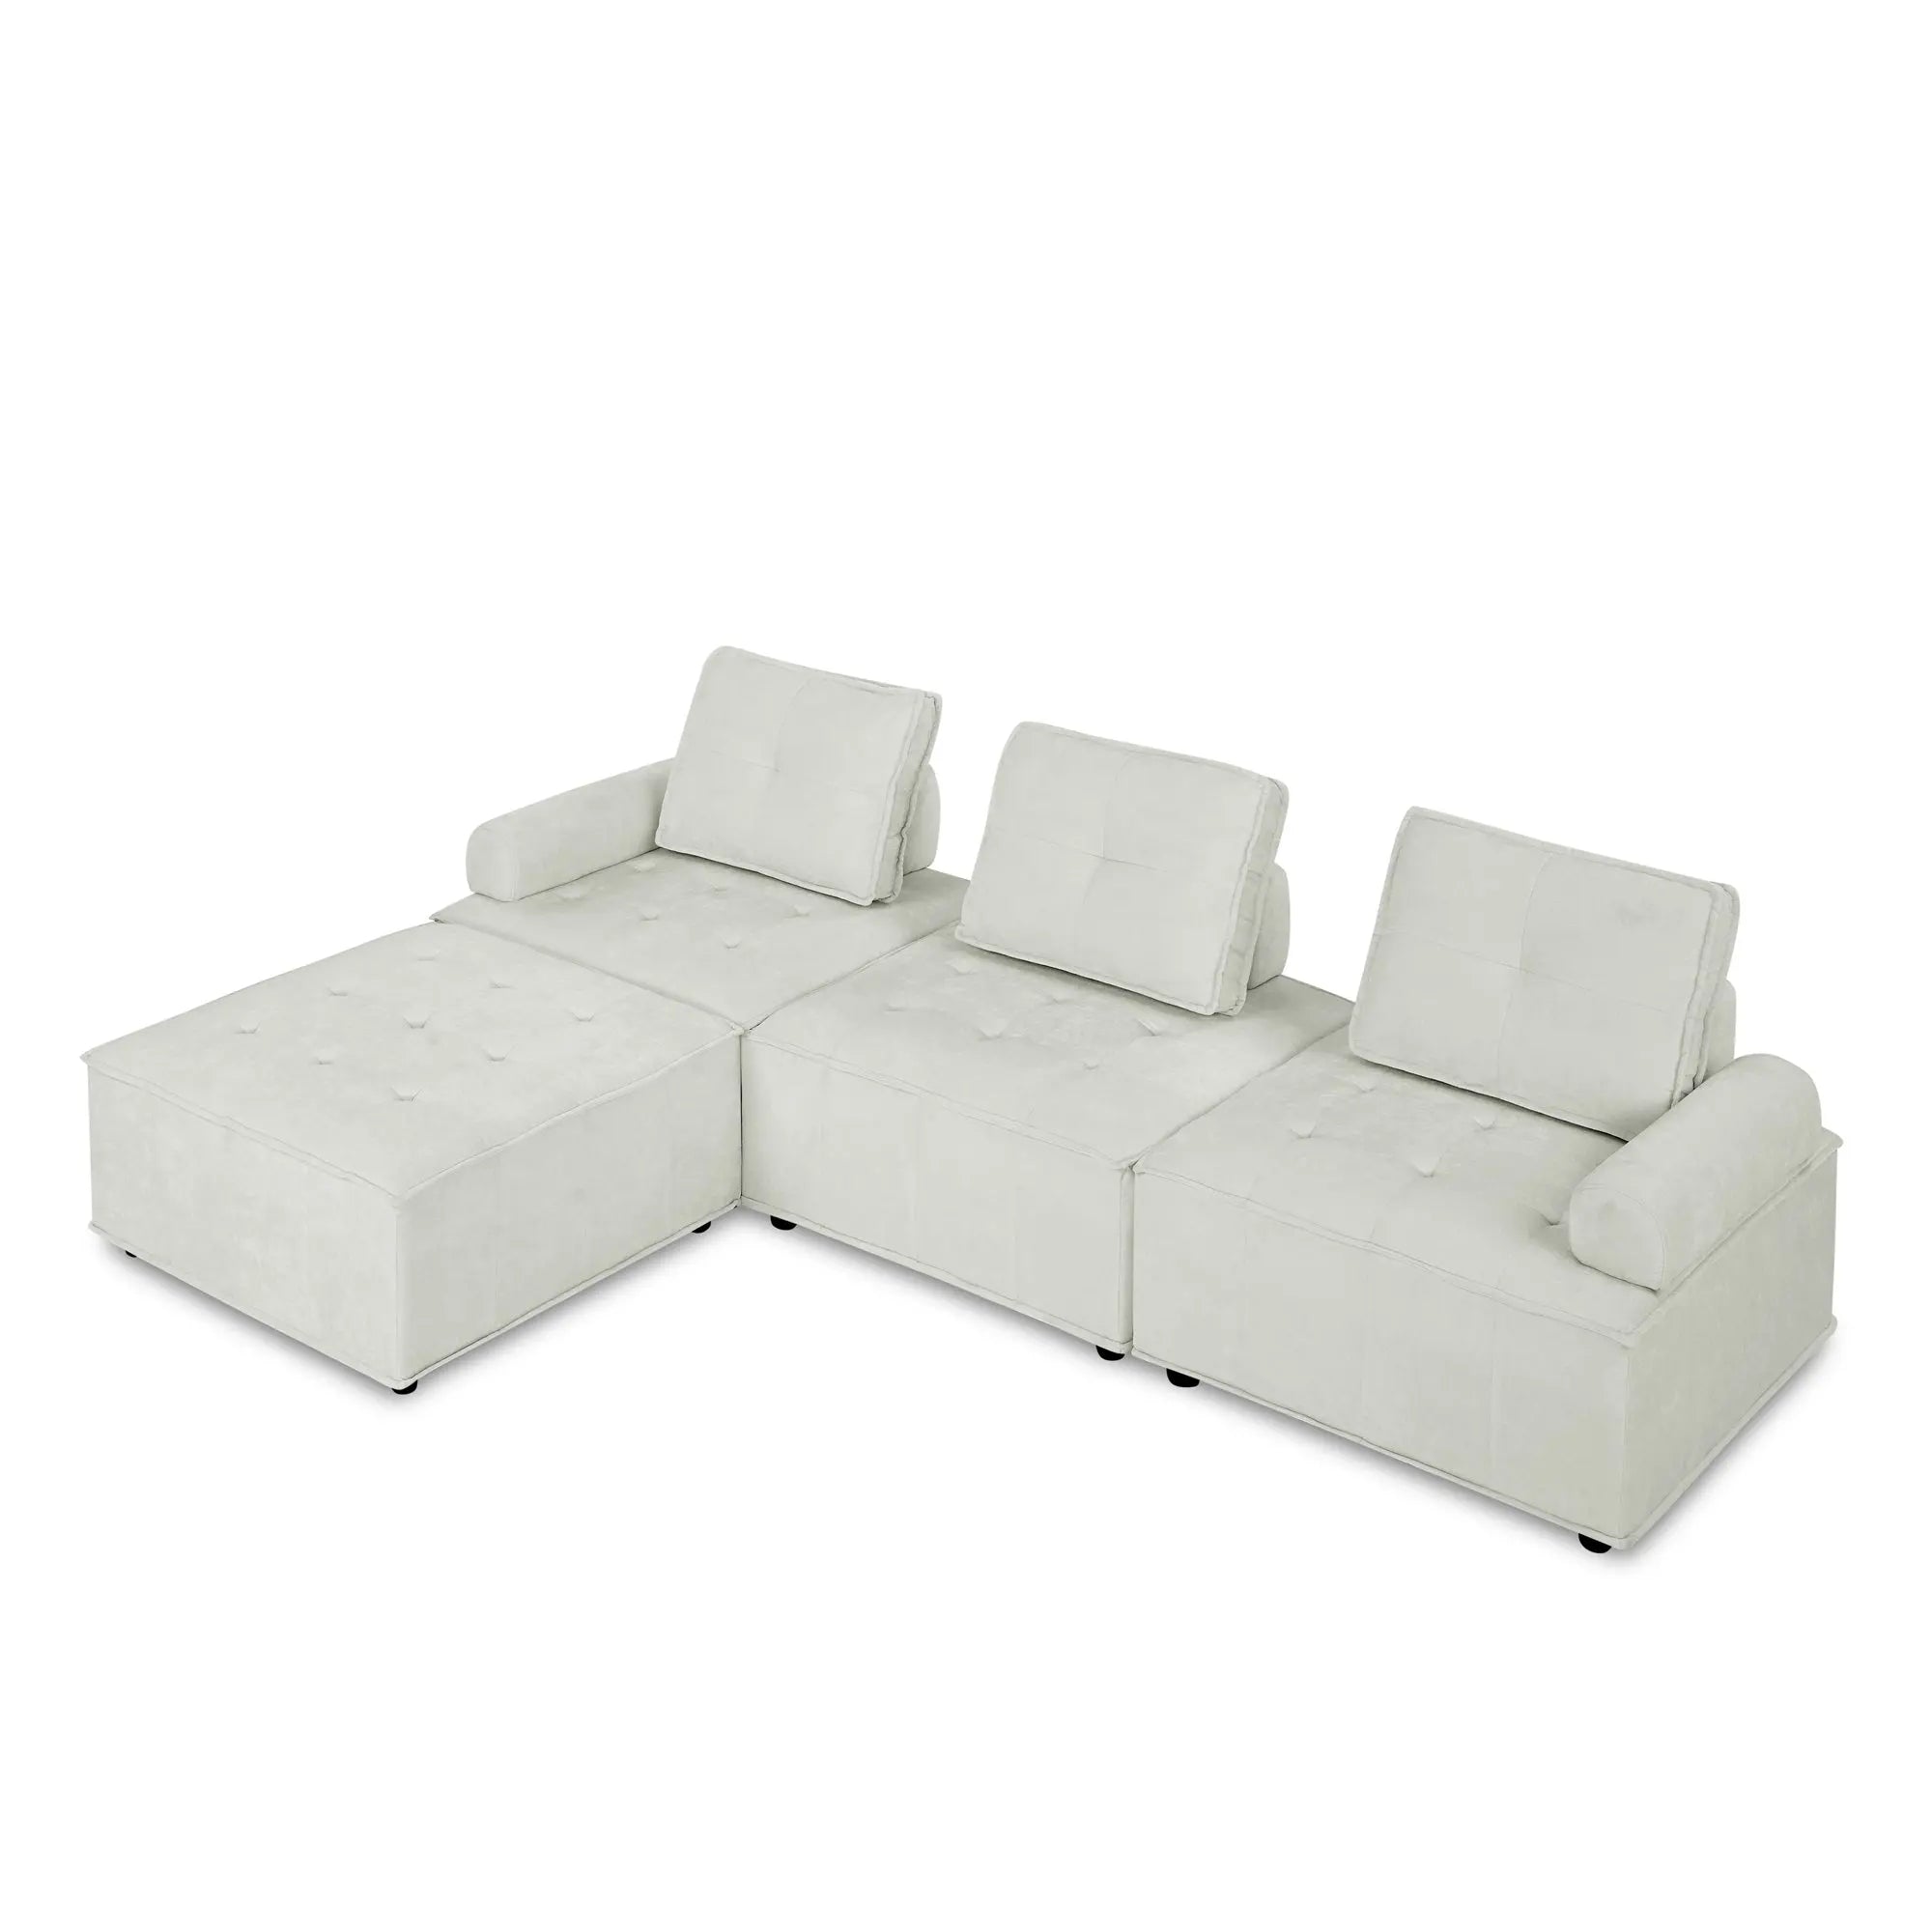 Bellemave 99" L-Shape Modular Sectional Sofa, DIY Combination Bellemave